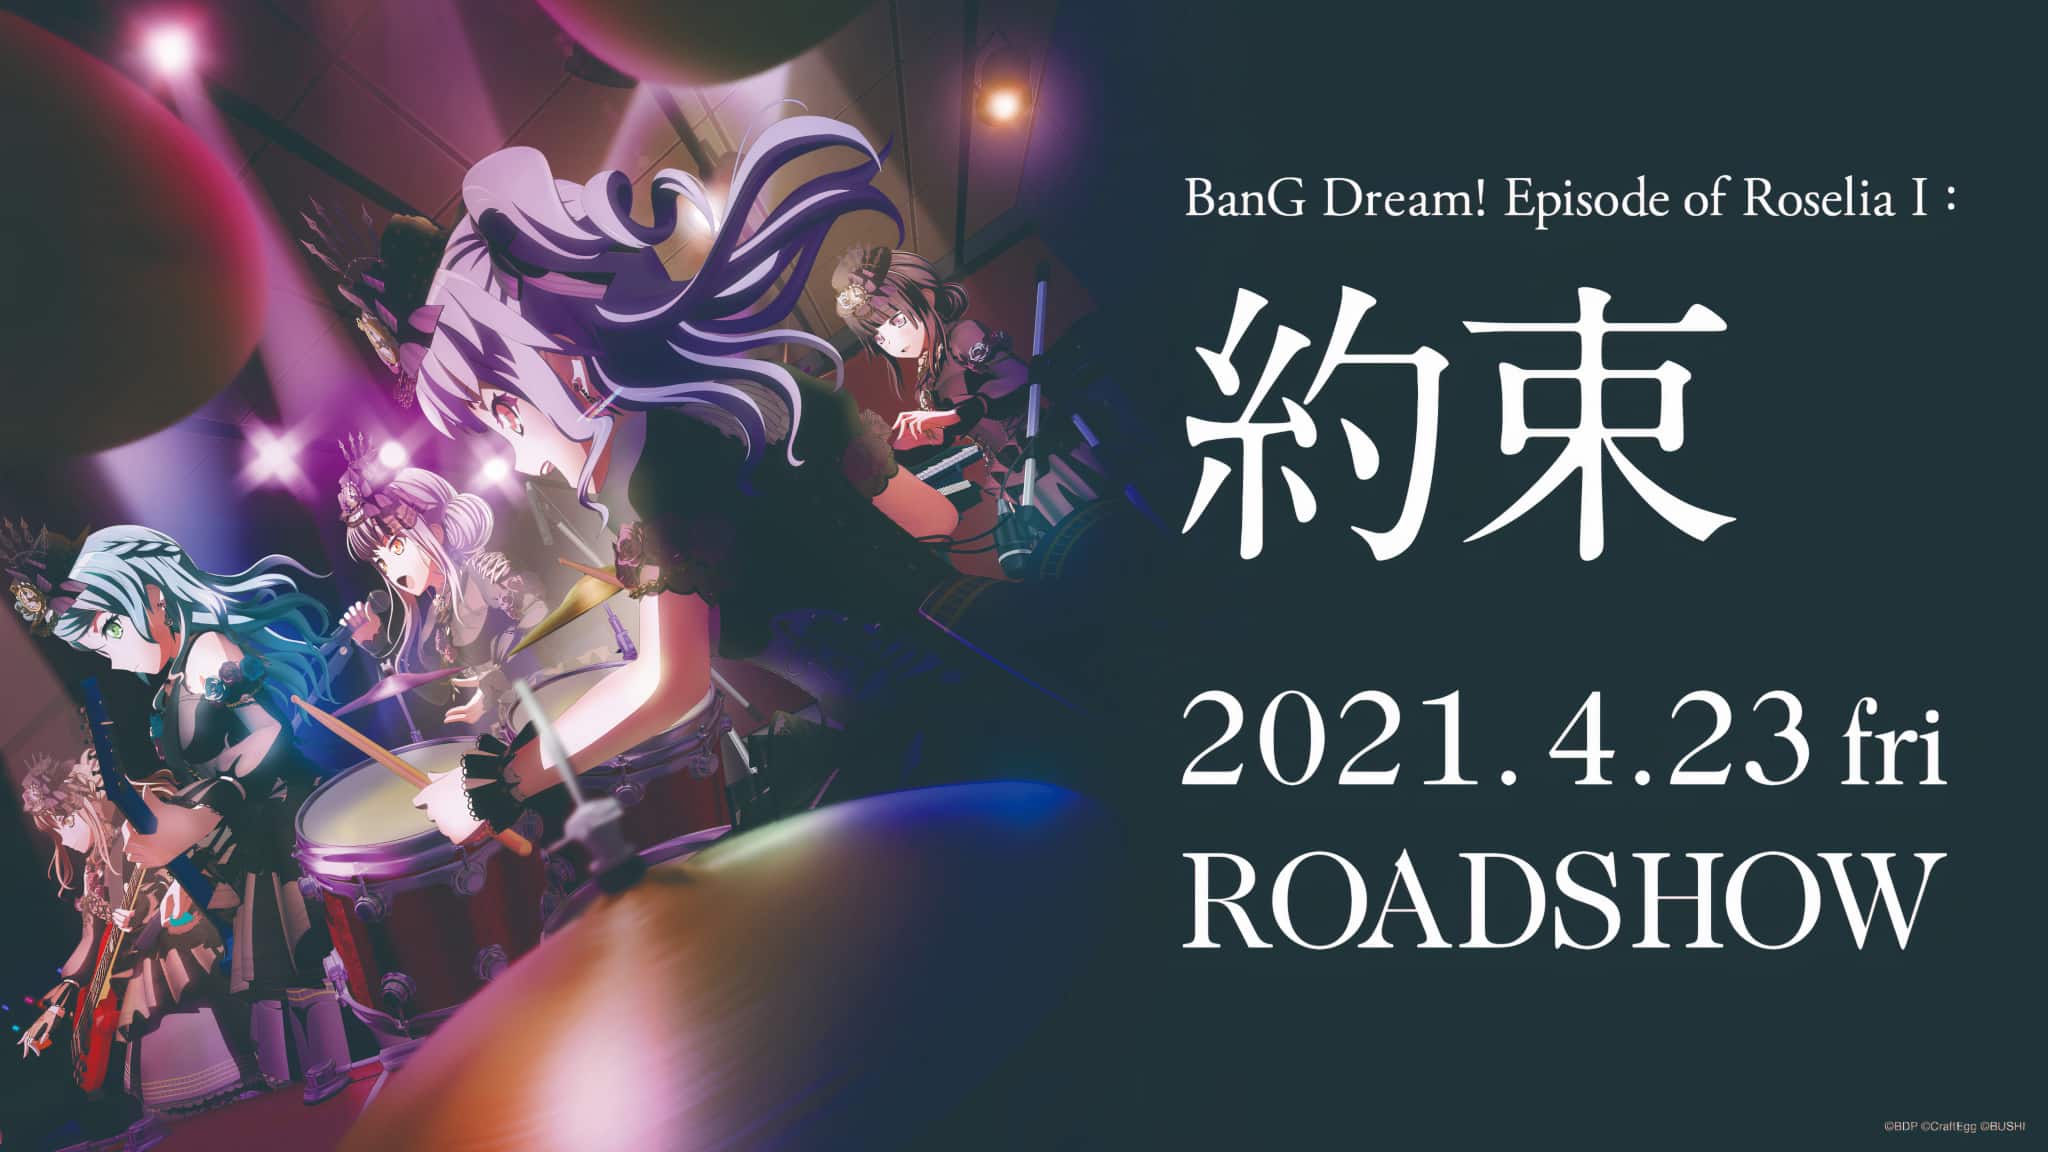 Visuel principal pour le film Bang Dream : Episode of Roselia 1 - Yakusoku